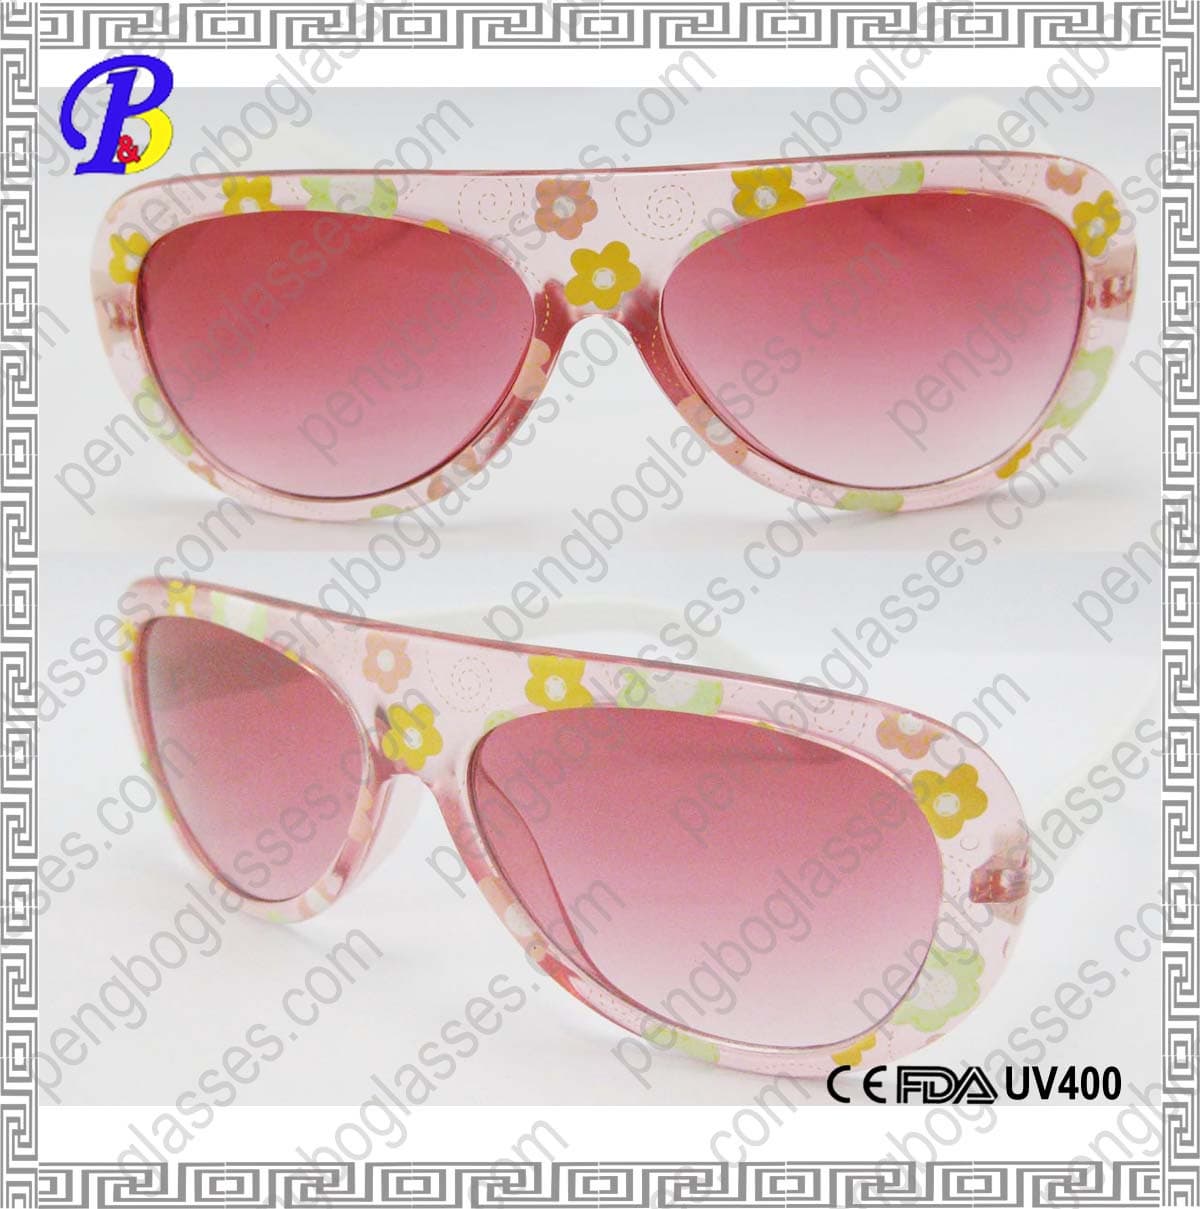 fashion kids sunglasses with high quality